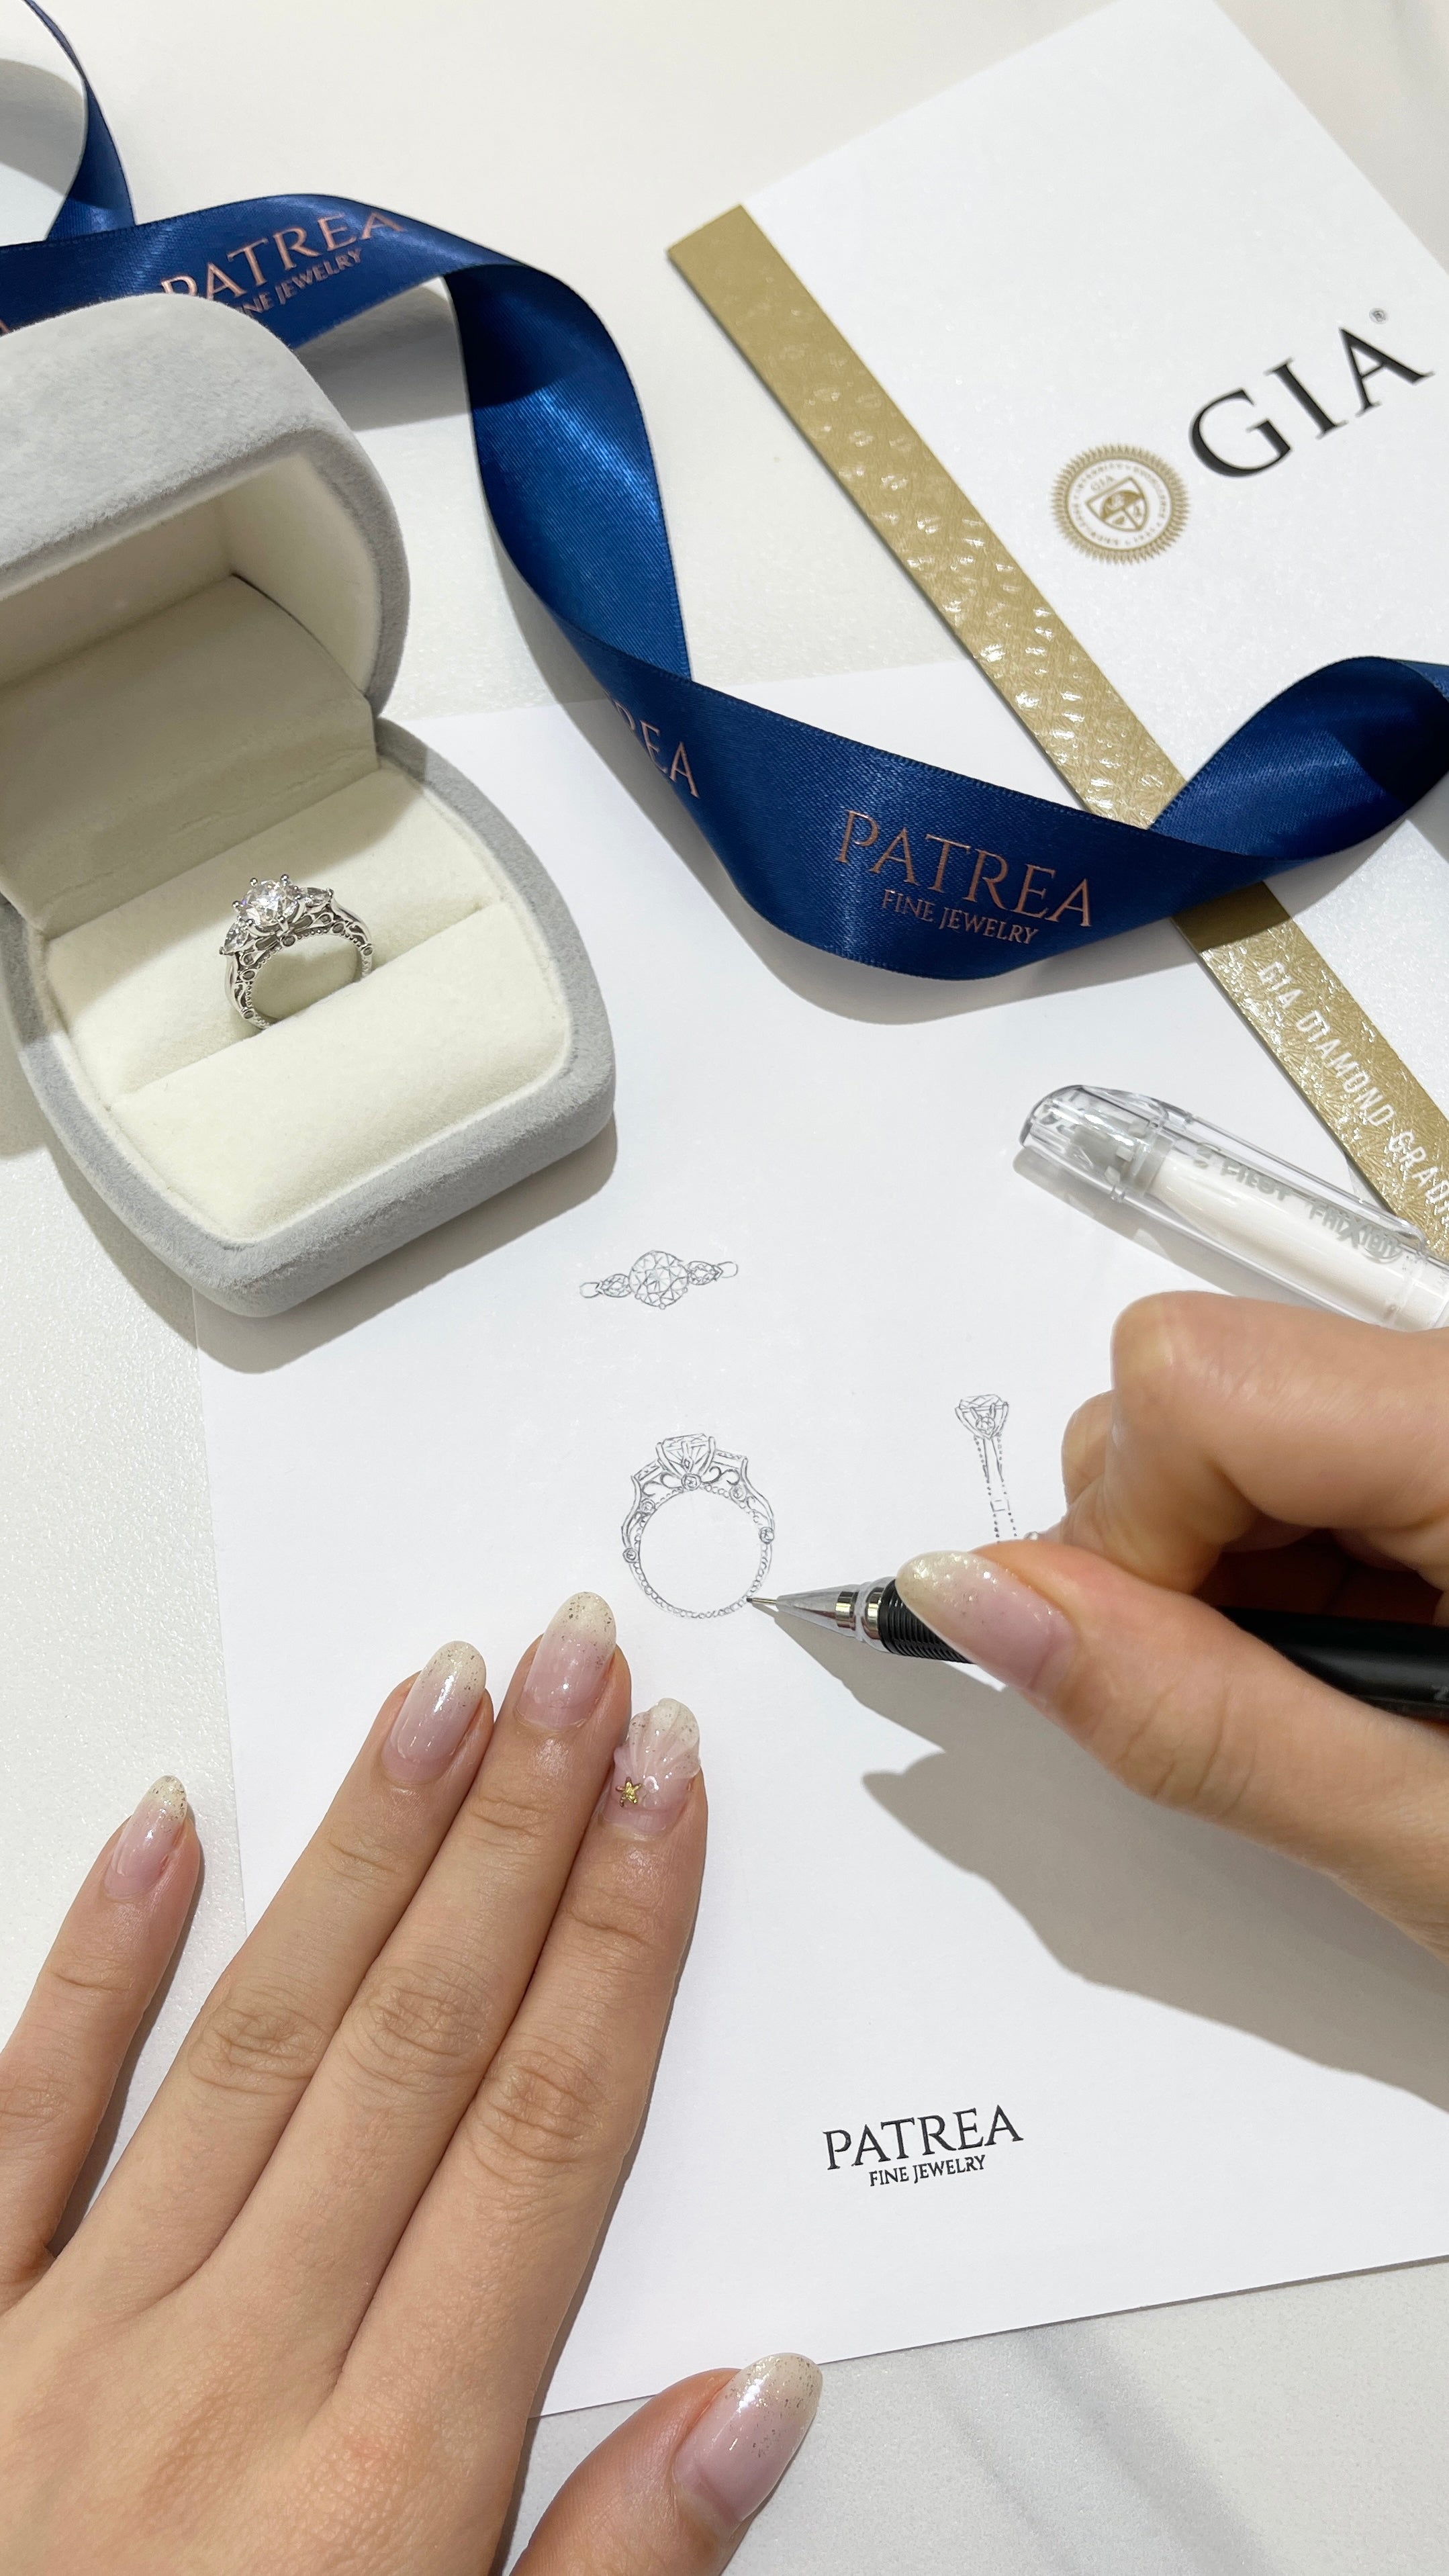 Premium Photo | Golden wedding type rings lie on white paper